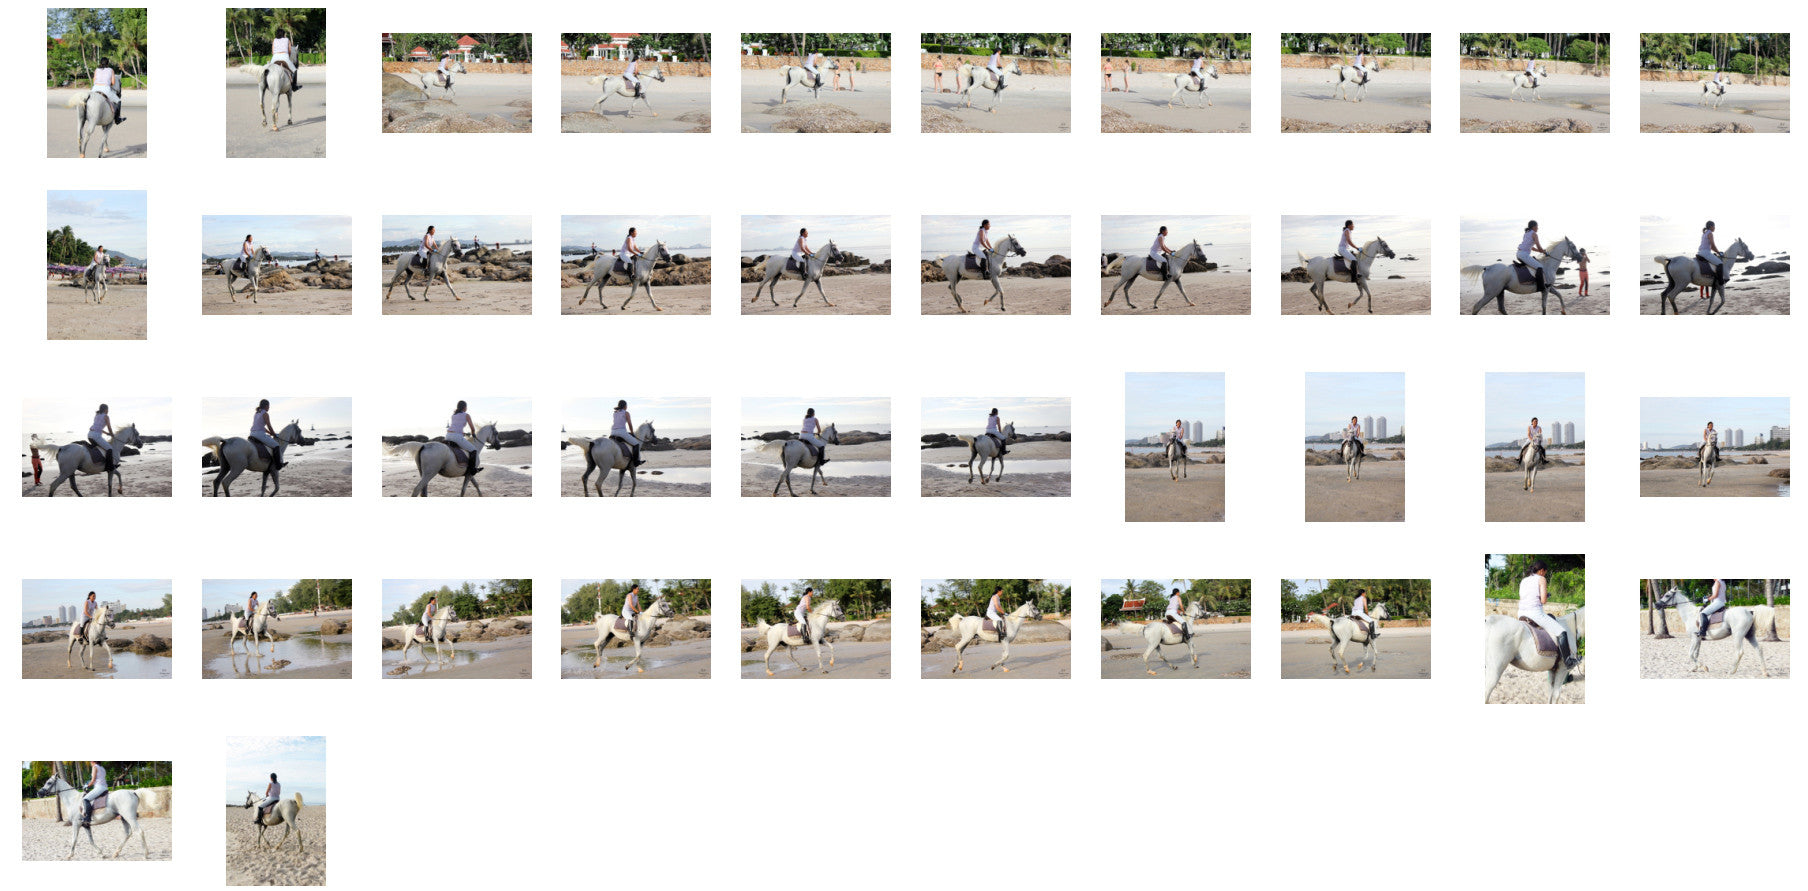 Nam in Jodhpurs Riding with Saddle on White Arabian Horse, Part 2 - Riding.Vision